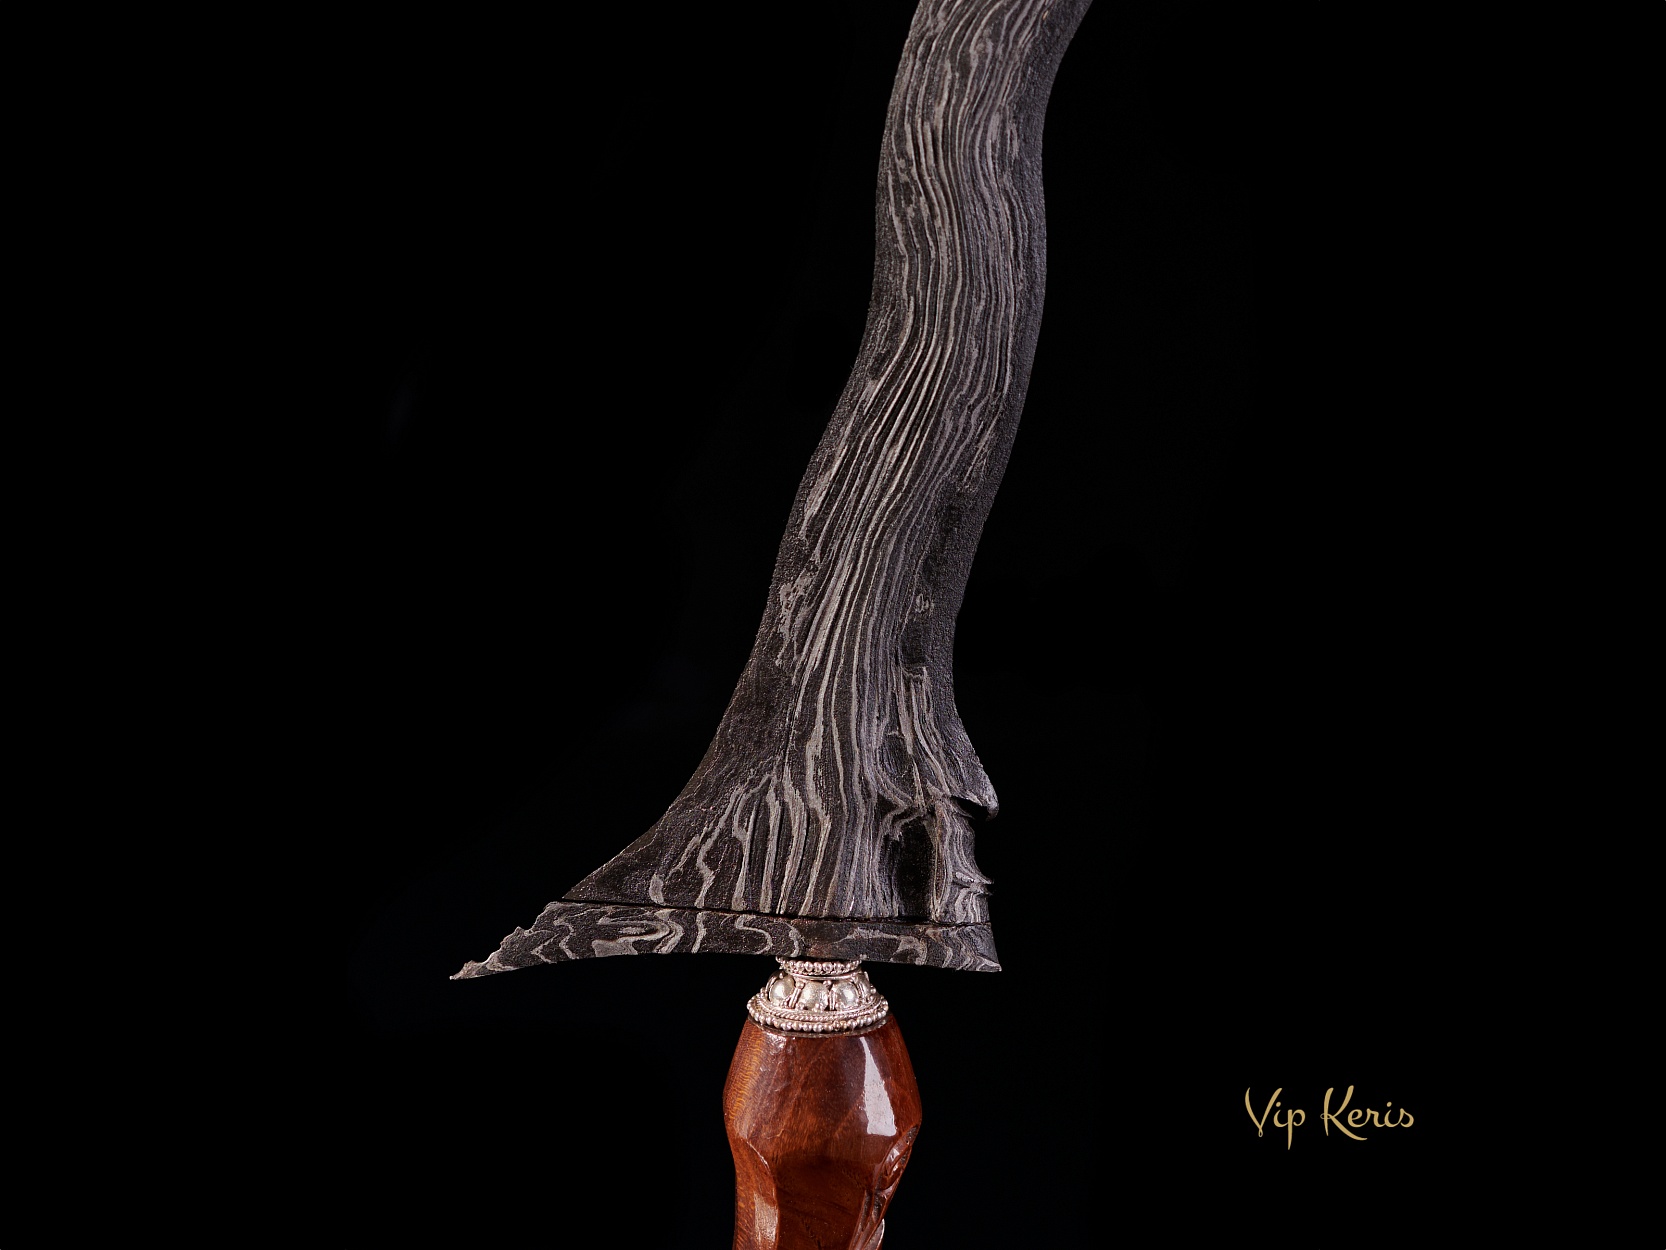 Пламевидный кинжал Крис Santal Luk11, 5 аркан фото VipKeris